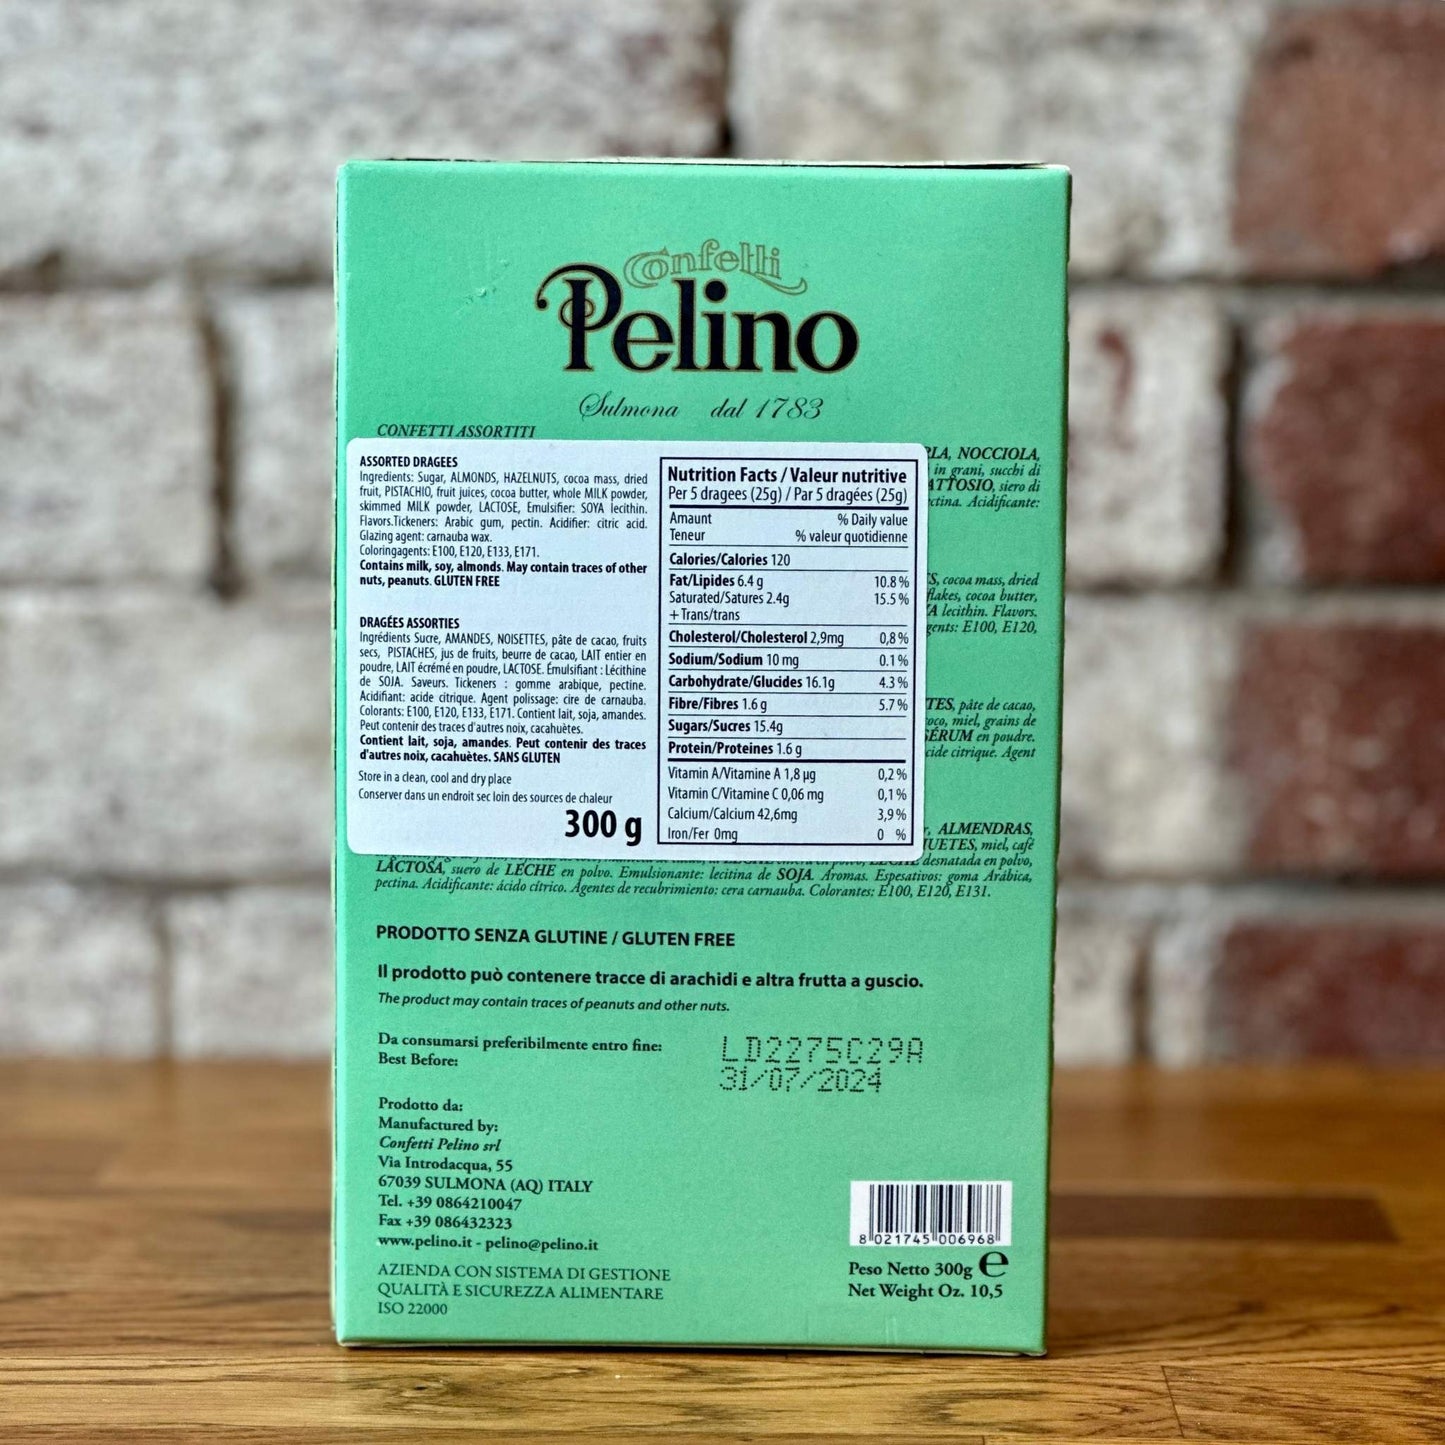 Assorted Dragees Pelino 300g - Confetti